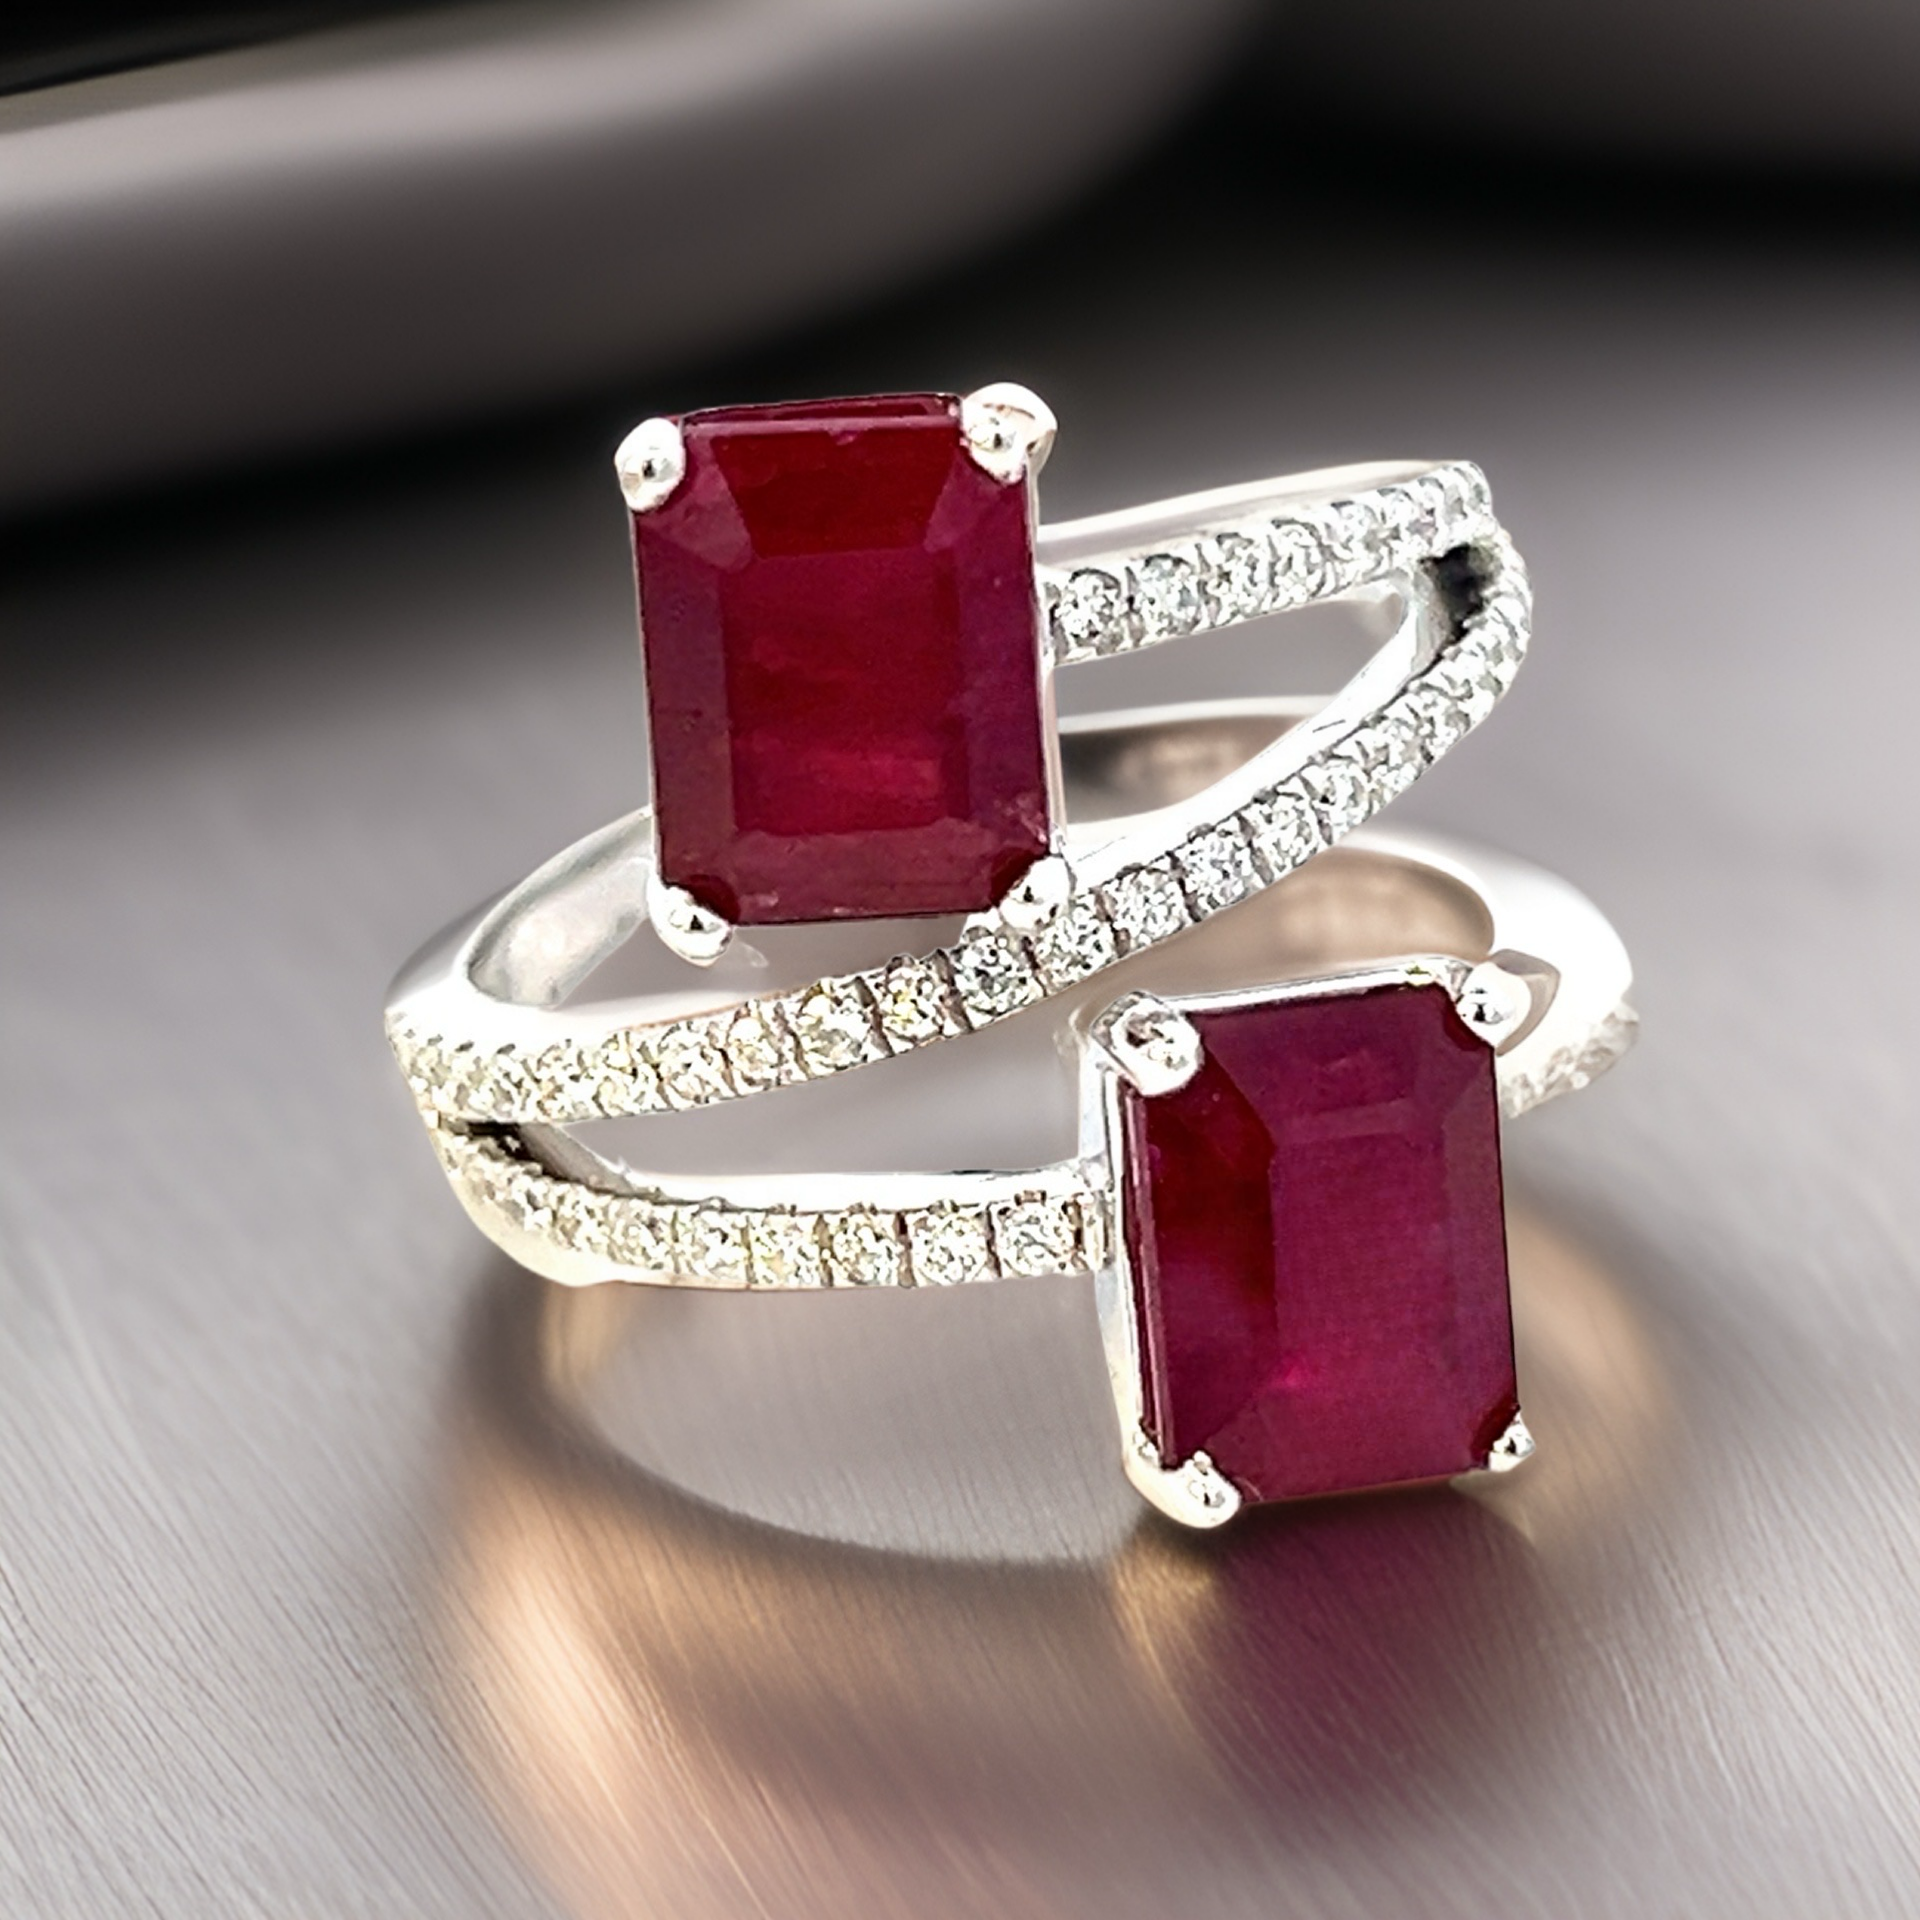 Natural Dual Ruby Diamond Ring 6.5 14k W Gold 5.02 TCW Certified $5,950 310541 - Certified Fine Jewelry